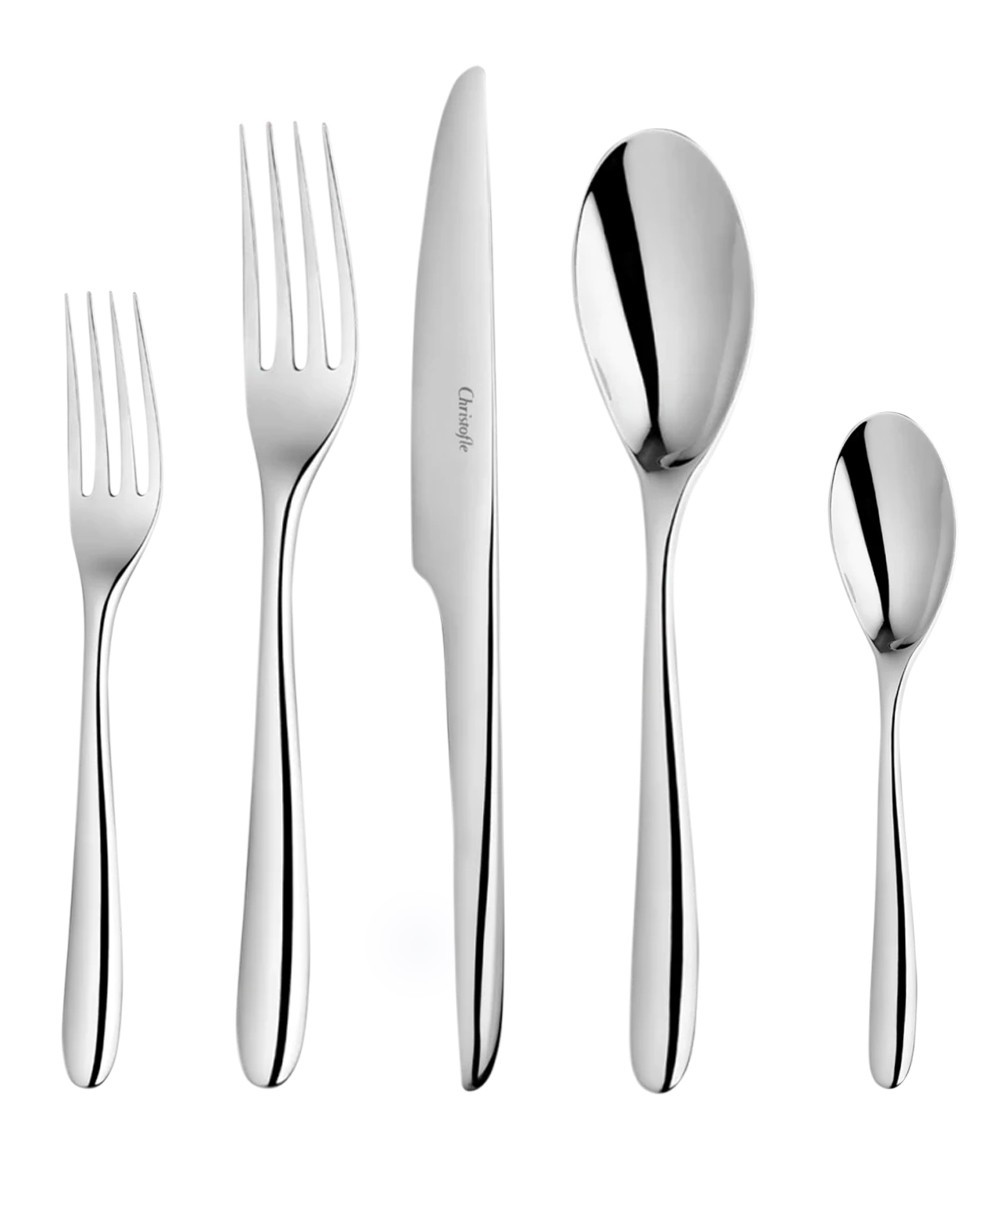  L’Ame de Christofle Cutlery 5-Piece Set